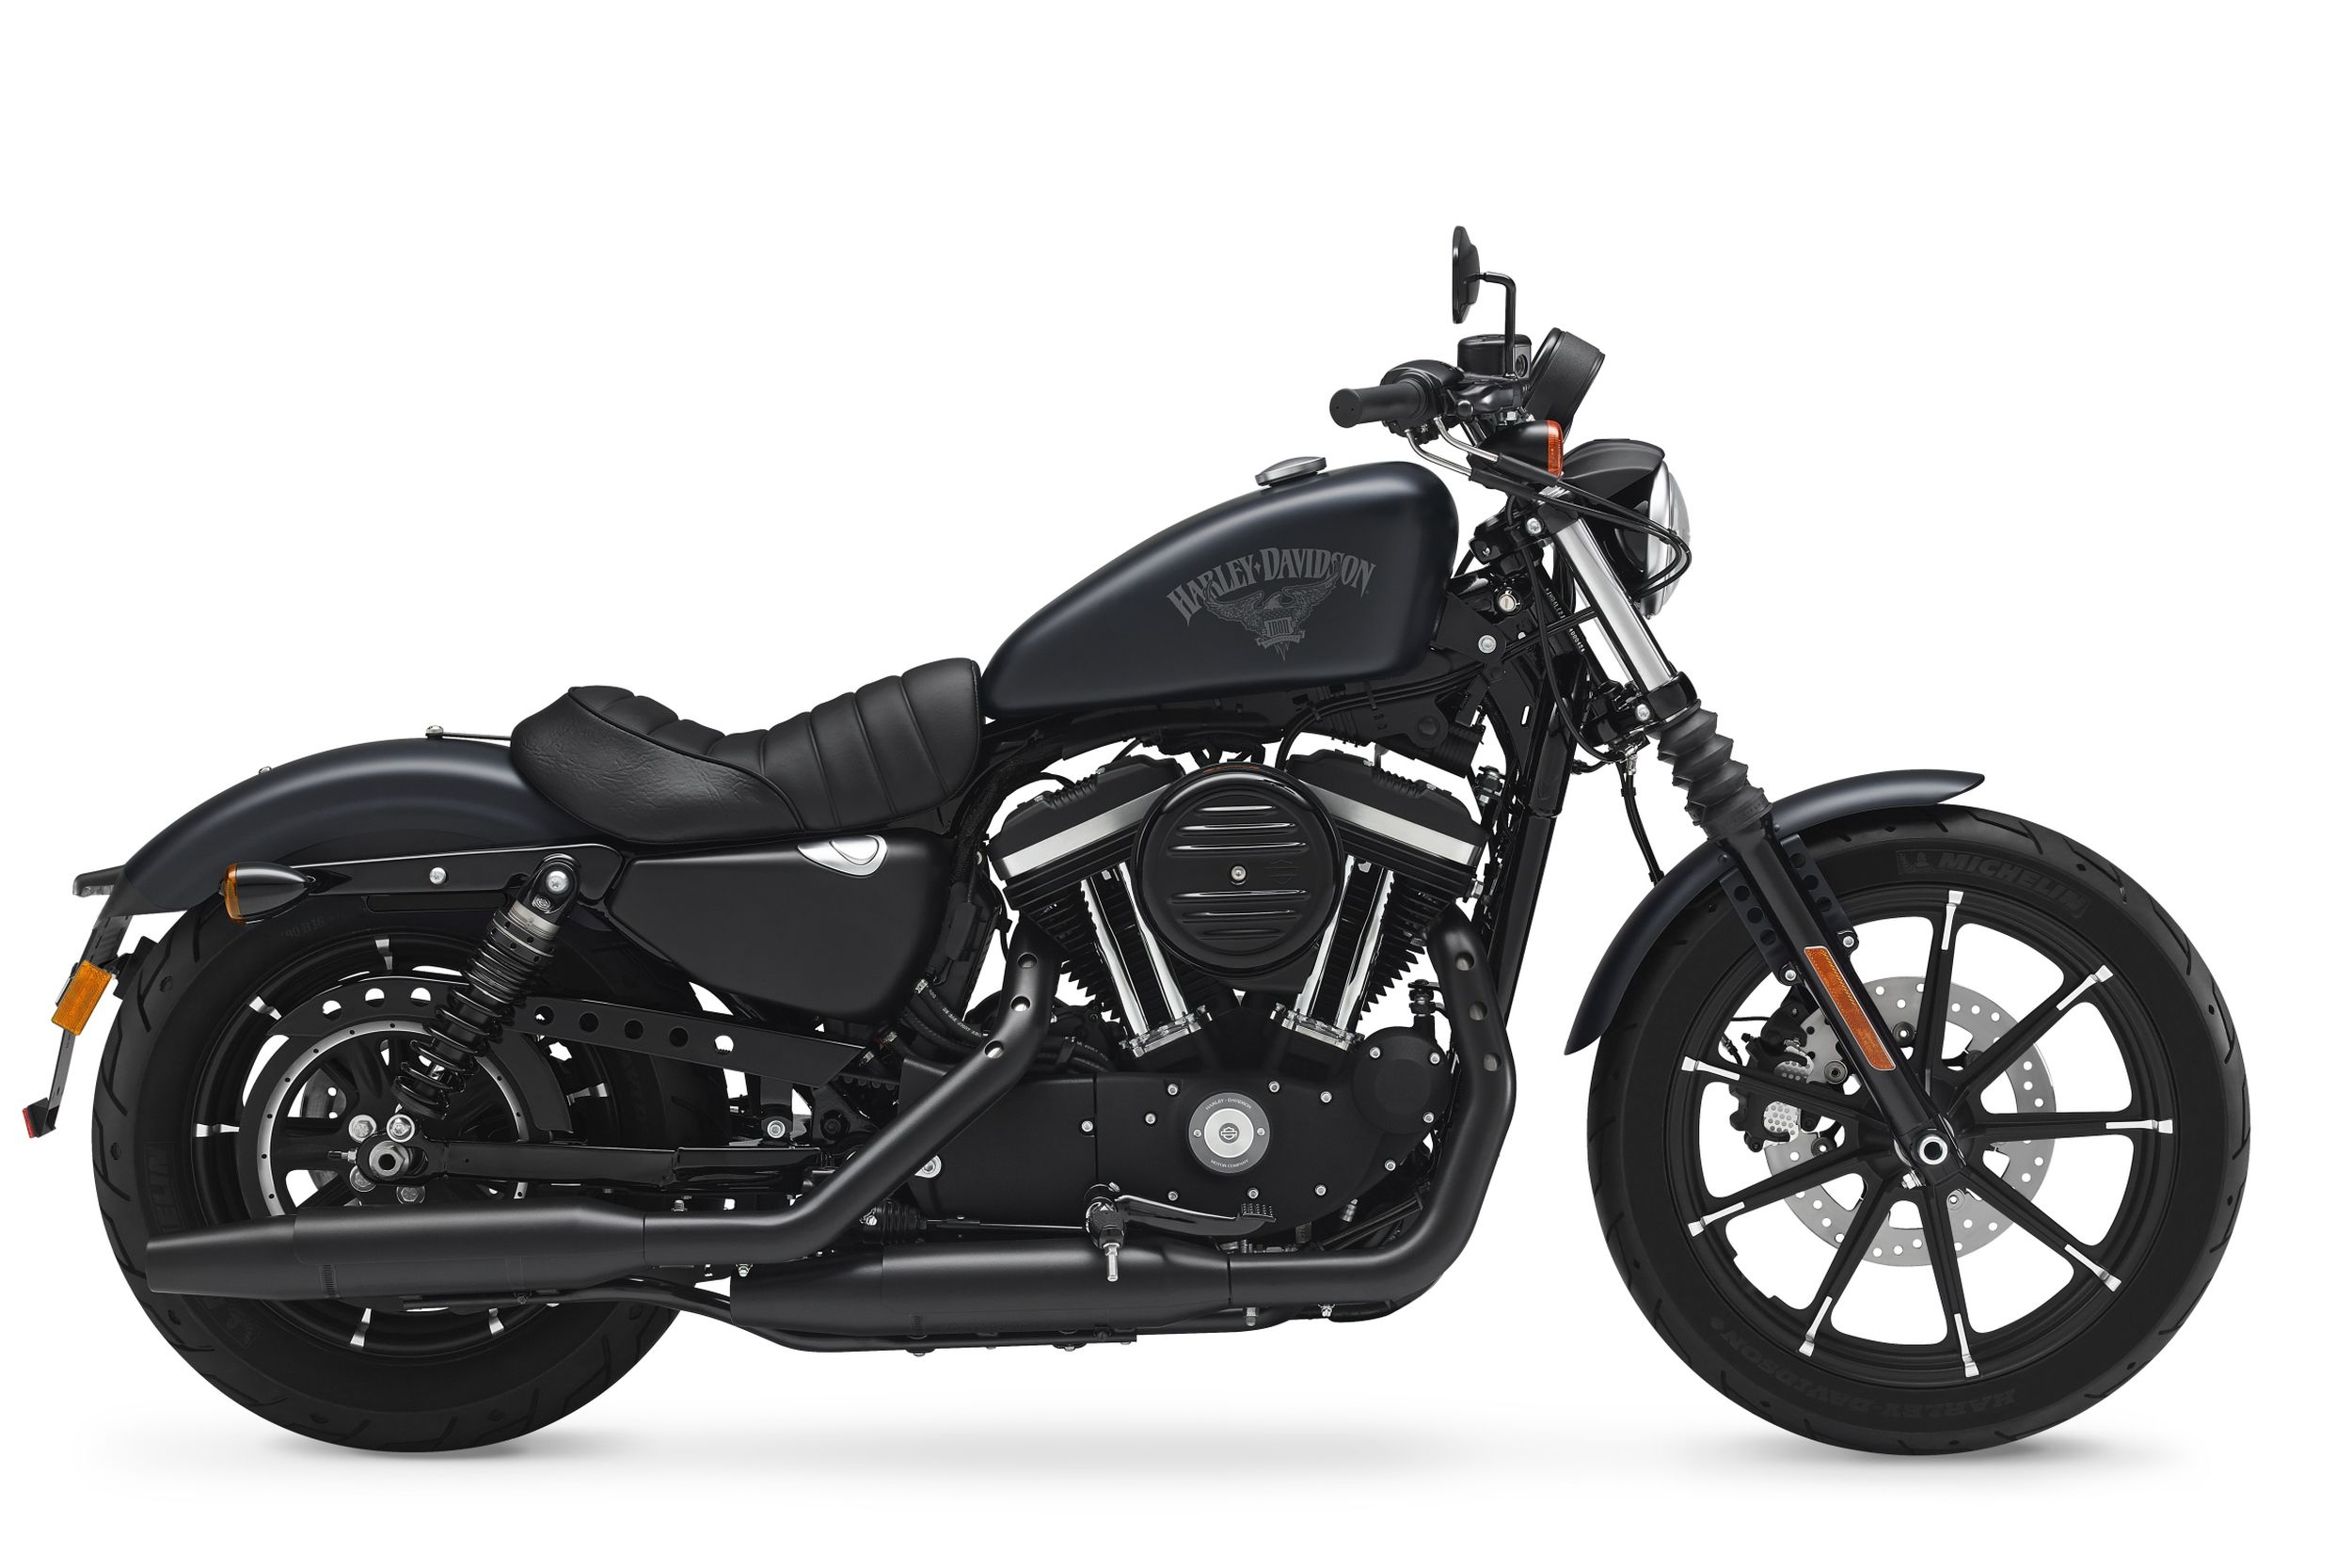 Motorrad Vergleich Harley Davidson Sportster Xl 883 N Iron 2017 Vs Harley Davidson Sportster Xl 883 R Roadster 2016